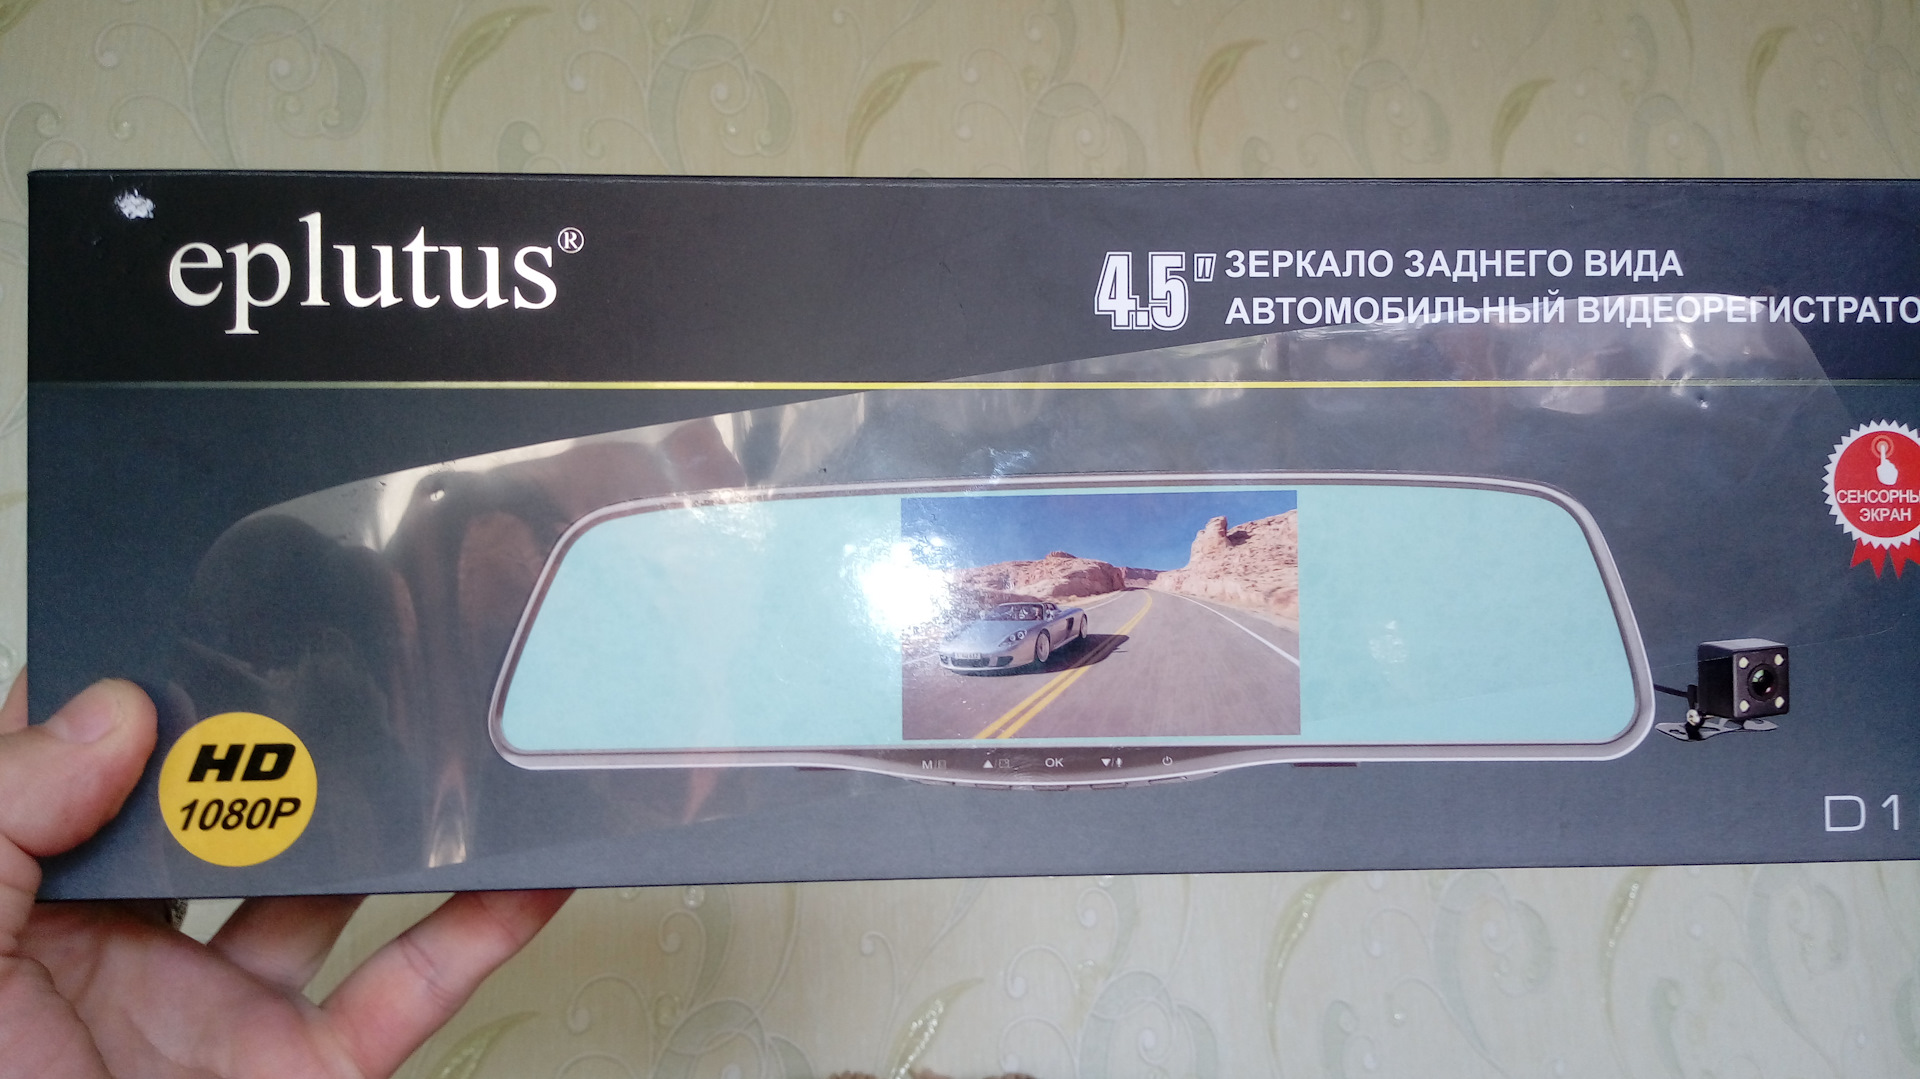 Зеркало Eplutus. Eplutus наклейка. О качестве бренд Eplutus. Фото 7 дюймового телевизора Eplutus.